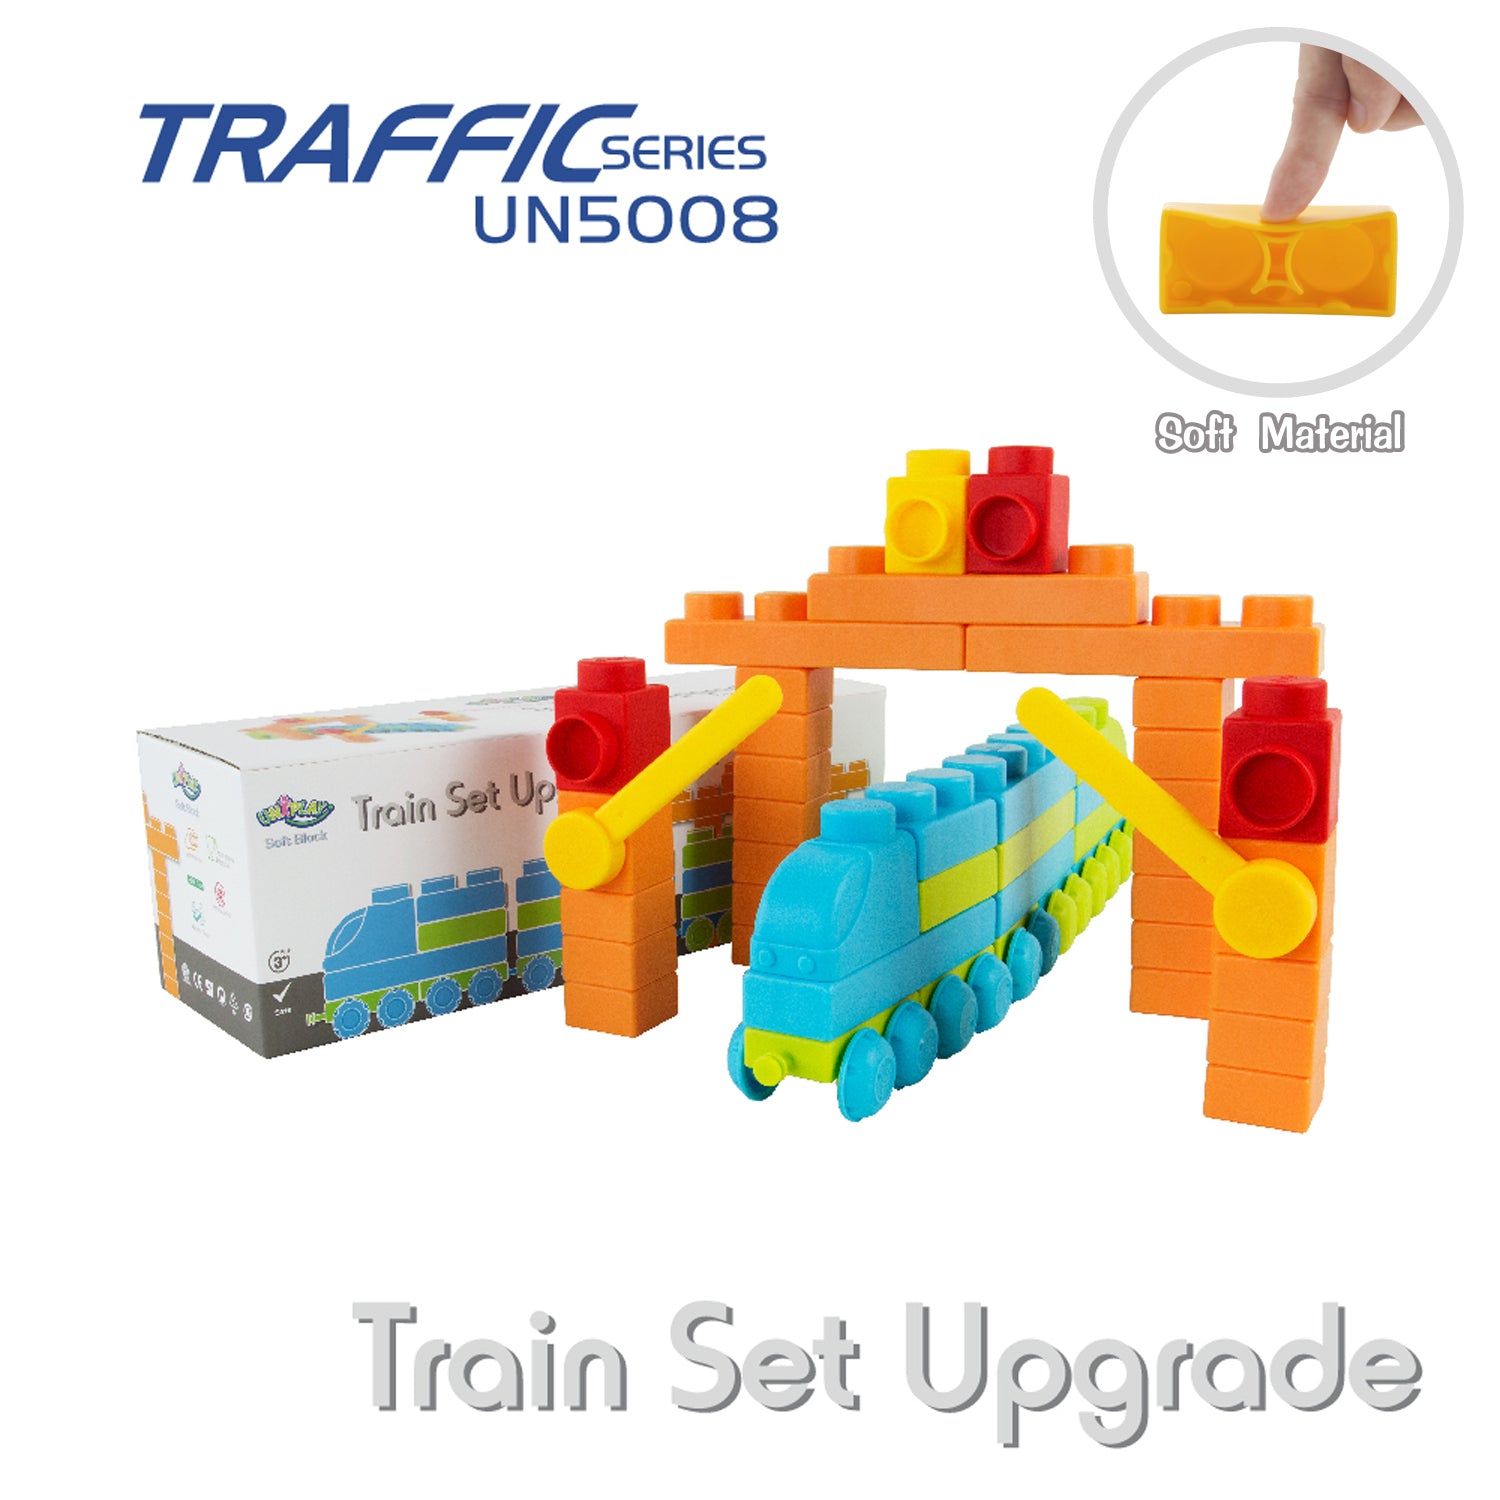 UNiPLAY Soft Building Blocks Traffic Series Train Set Upgrade (#UN5008)